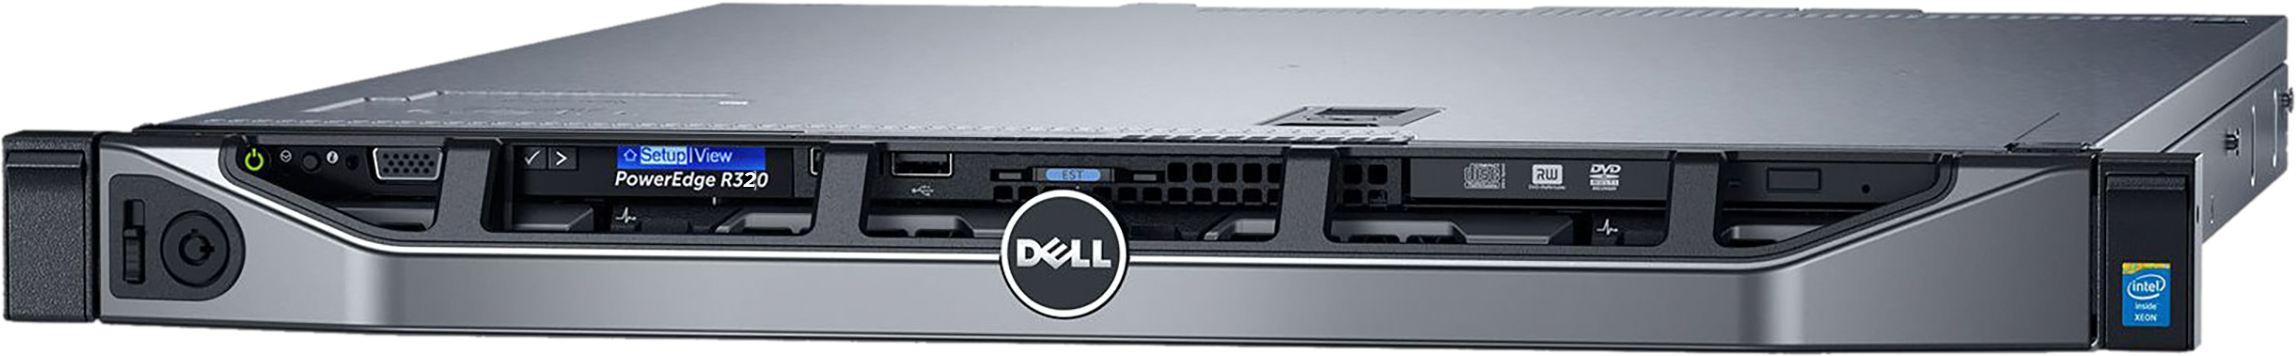 Аренда физического сервера DELL R320 / E5-2430 v2 / 16 GB RAM / 4 x 6 TB HDD / H310